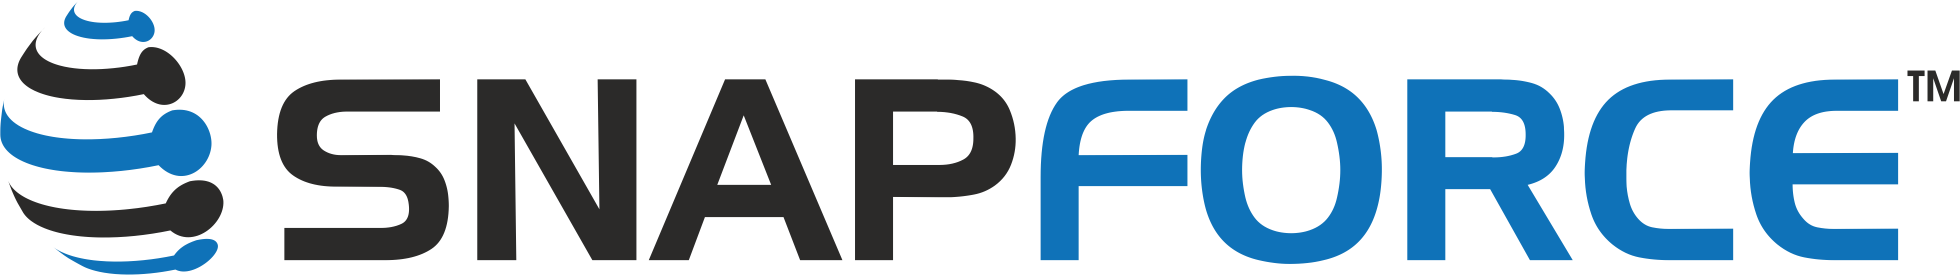 Snapforce Logo